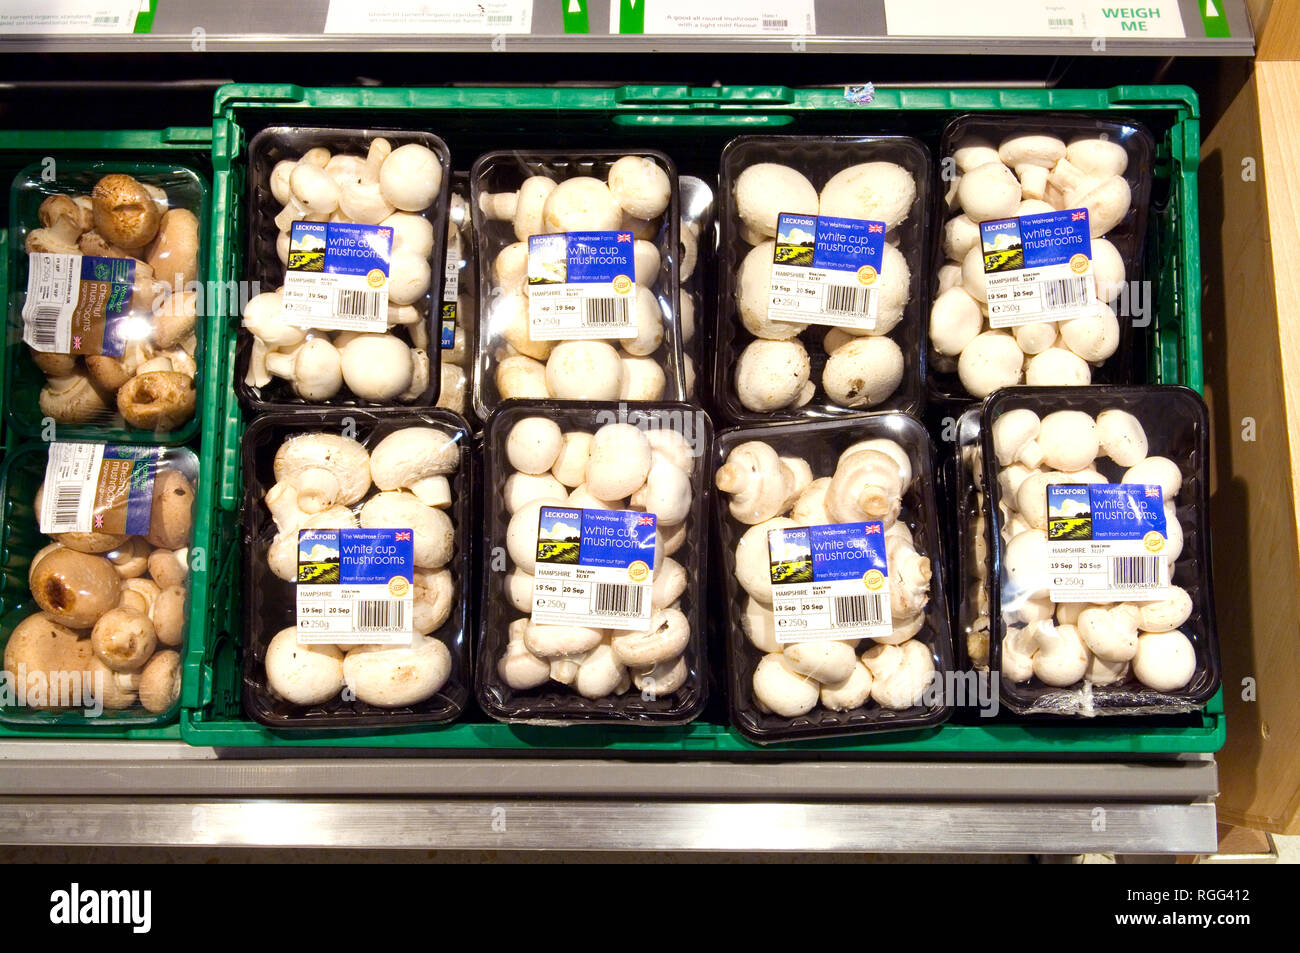 Waitrose English grown mushrooms. Stock Photo